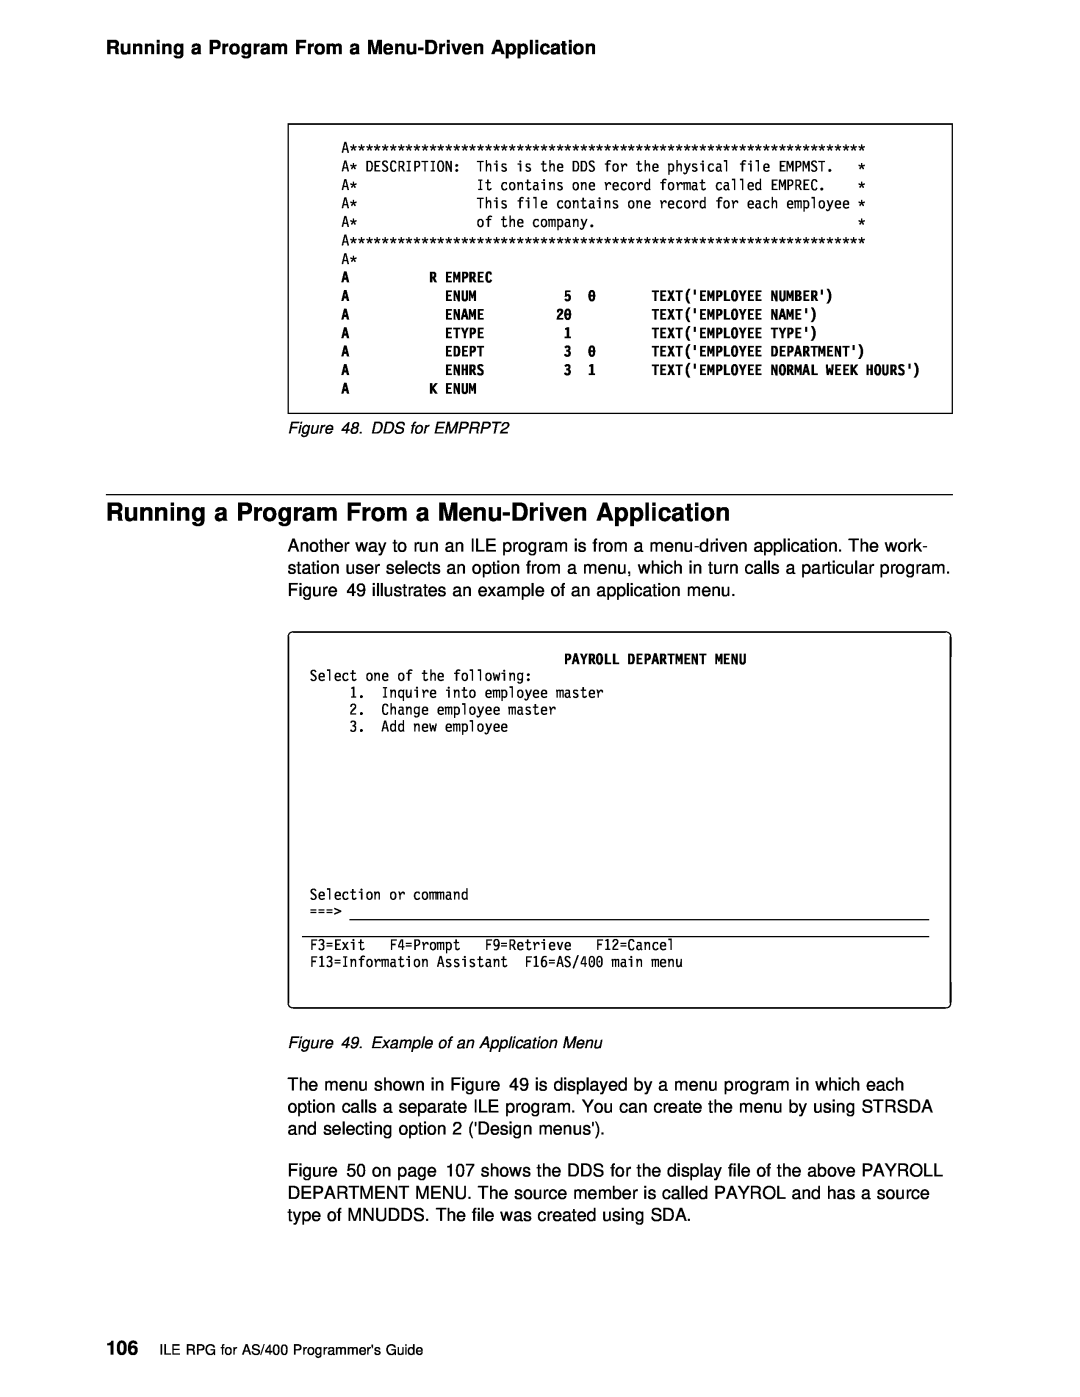 IBM AS/400 manual Running a Program From a Menu-Driven Application 